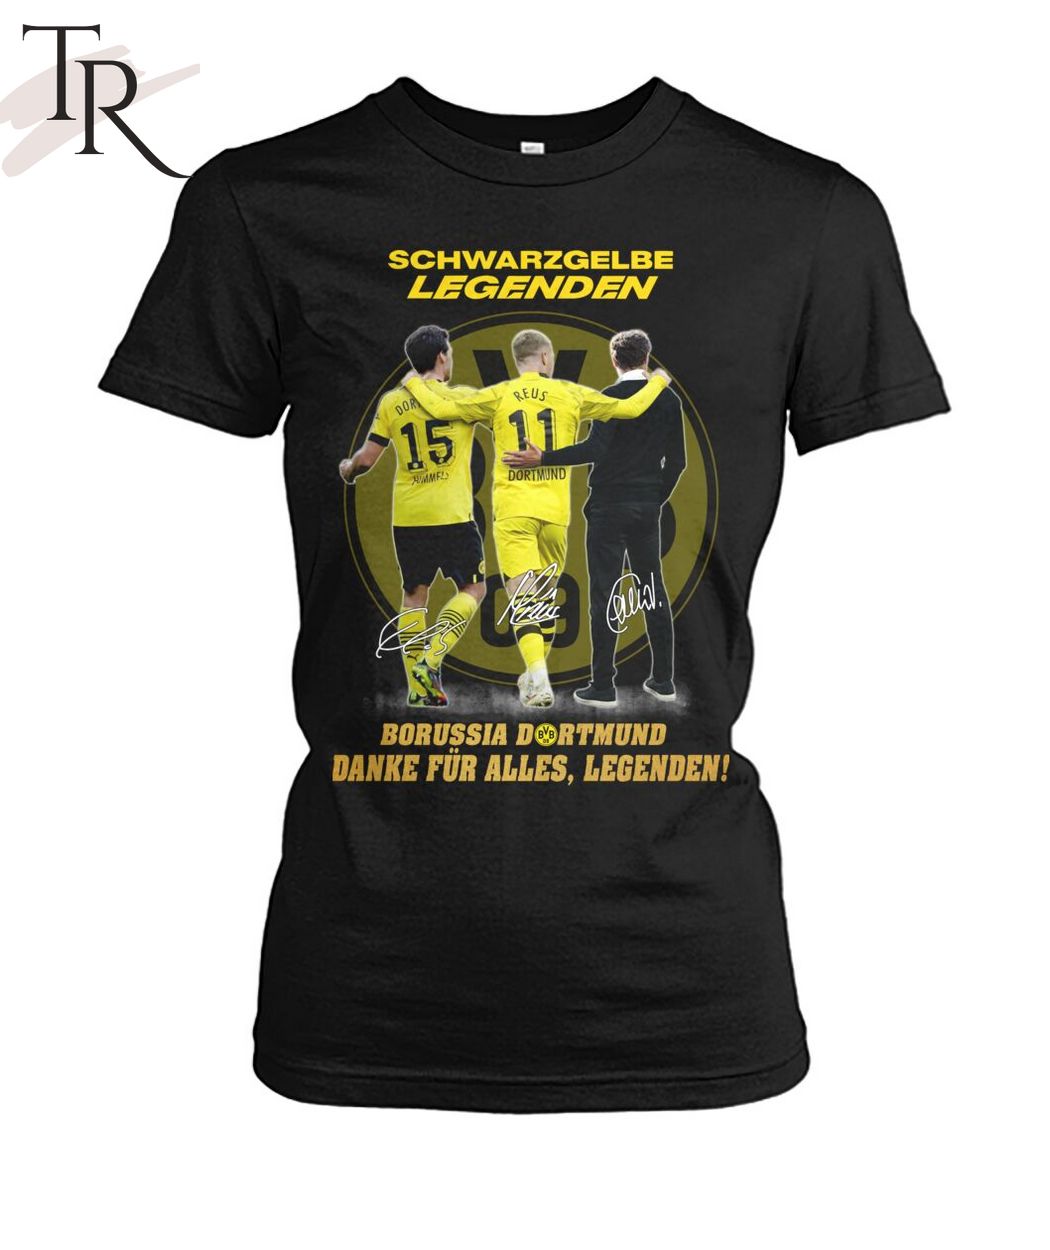 Schwarzgelbe Legenden Borussia Dortmund Danke Fur Alles, Legenden T-Shirt